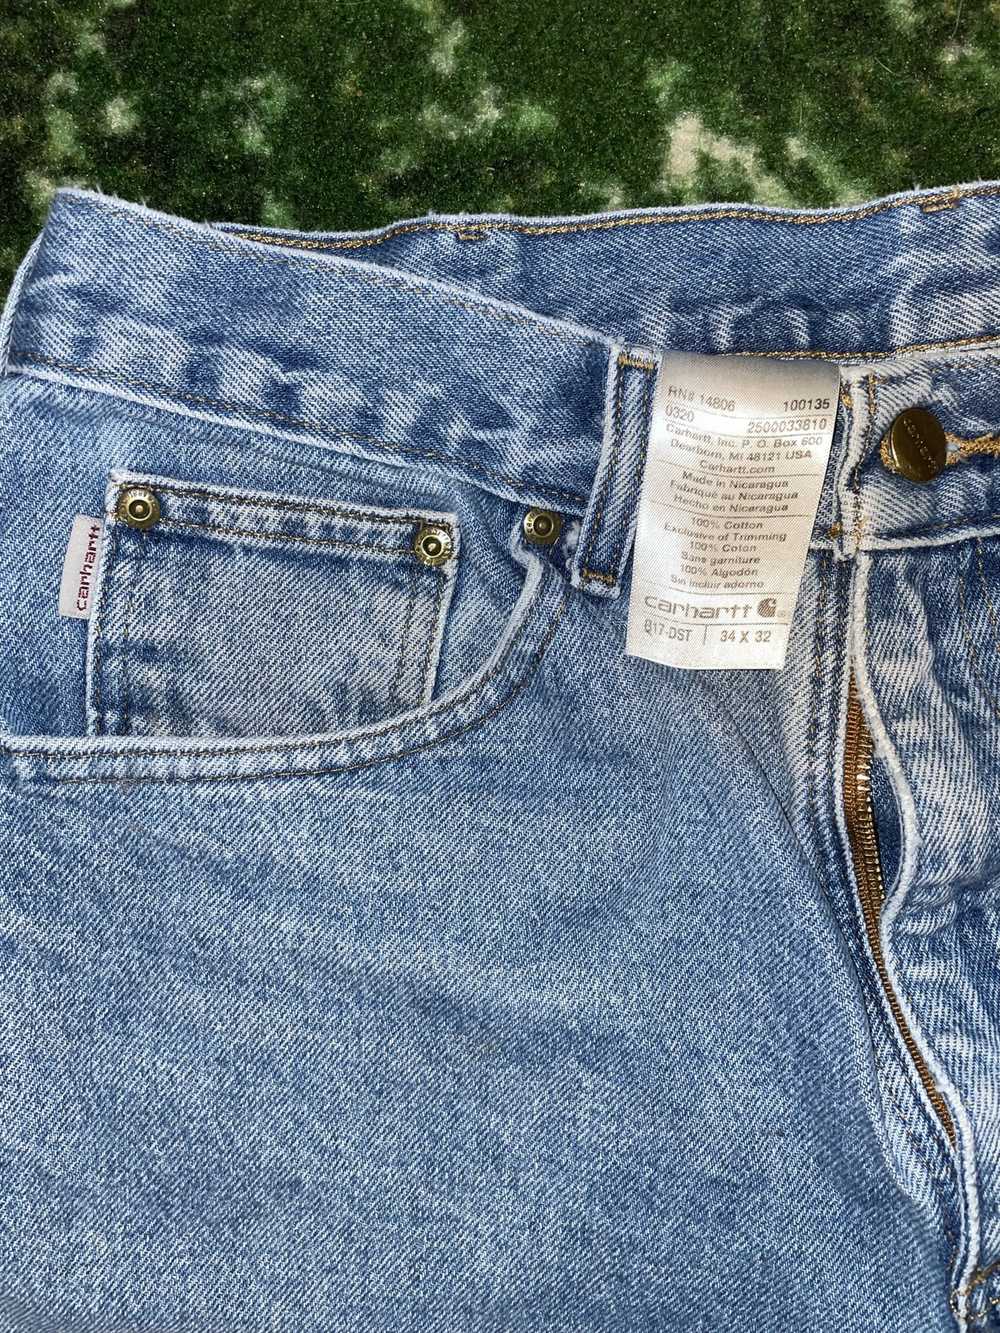 Carhartt Vintage Carhartt Light Wash Jeans - image 3